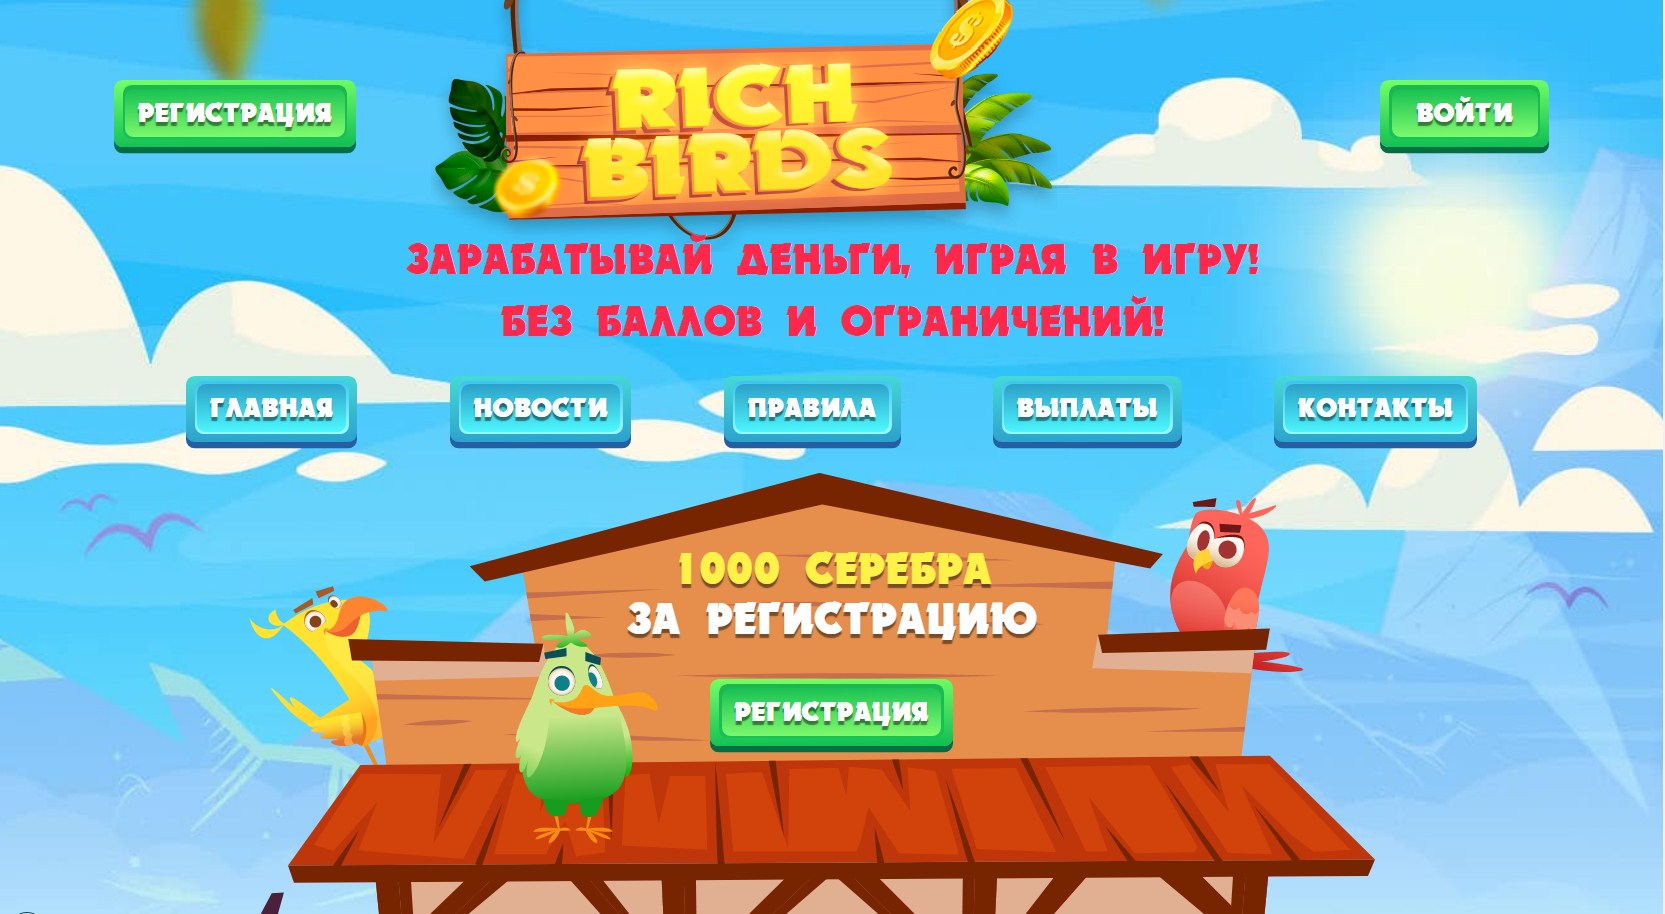 Rich_birds